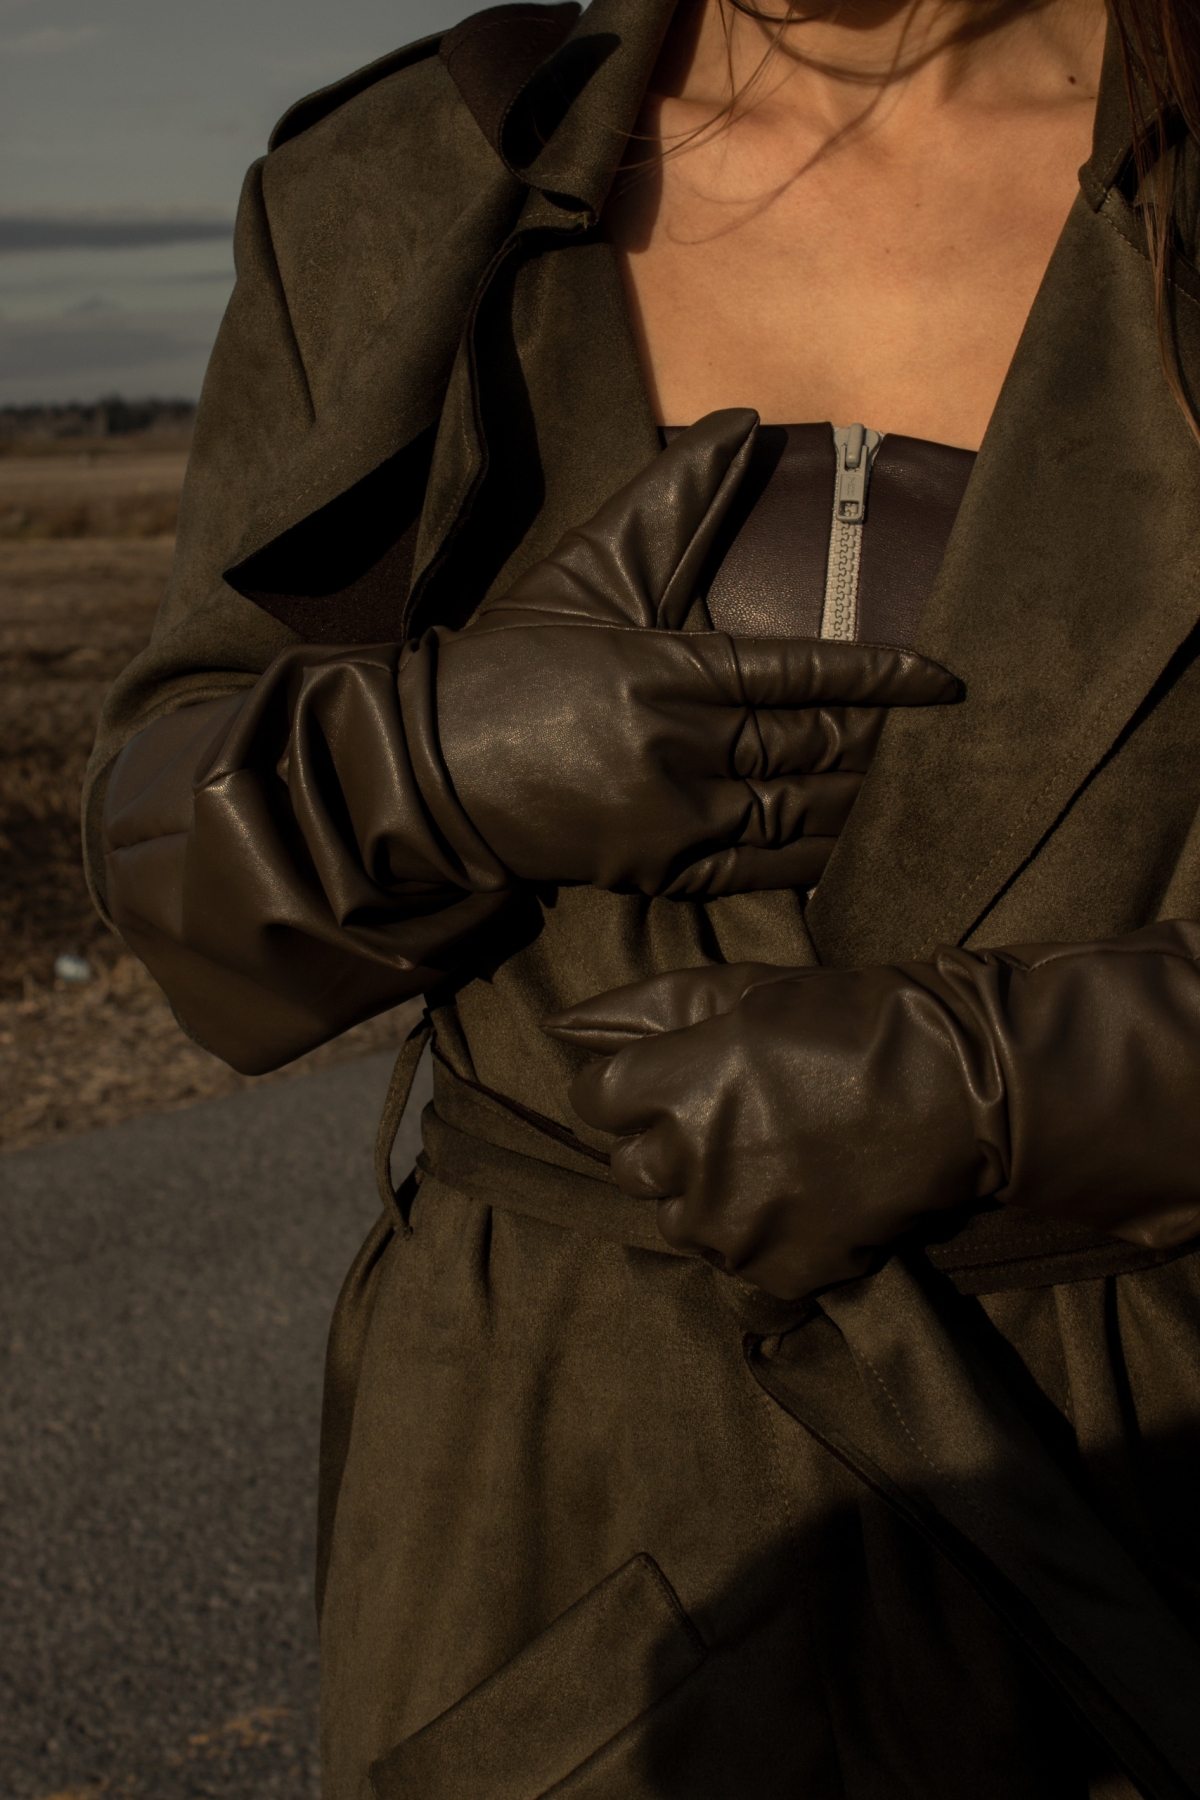 Woman wearing medieval faux leather gauntlet gloves in cedar brown